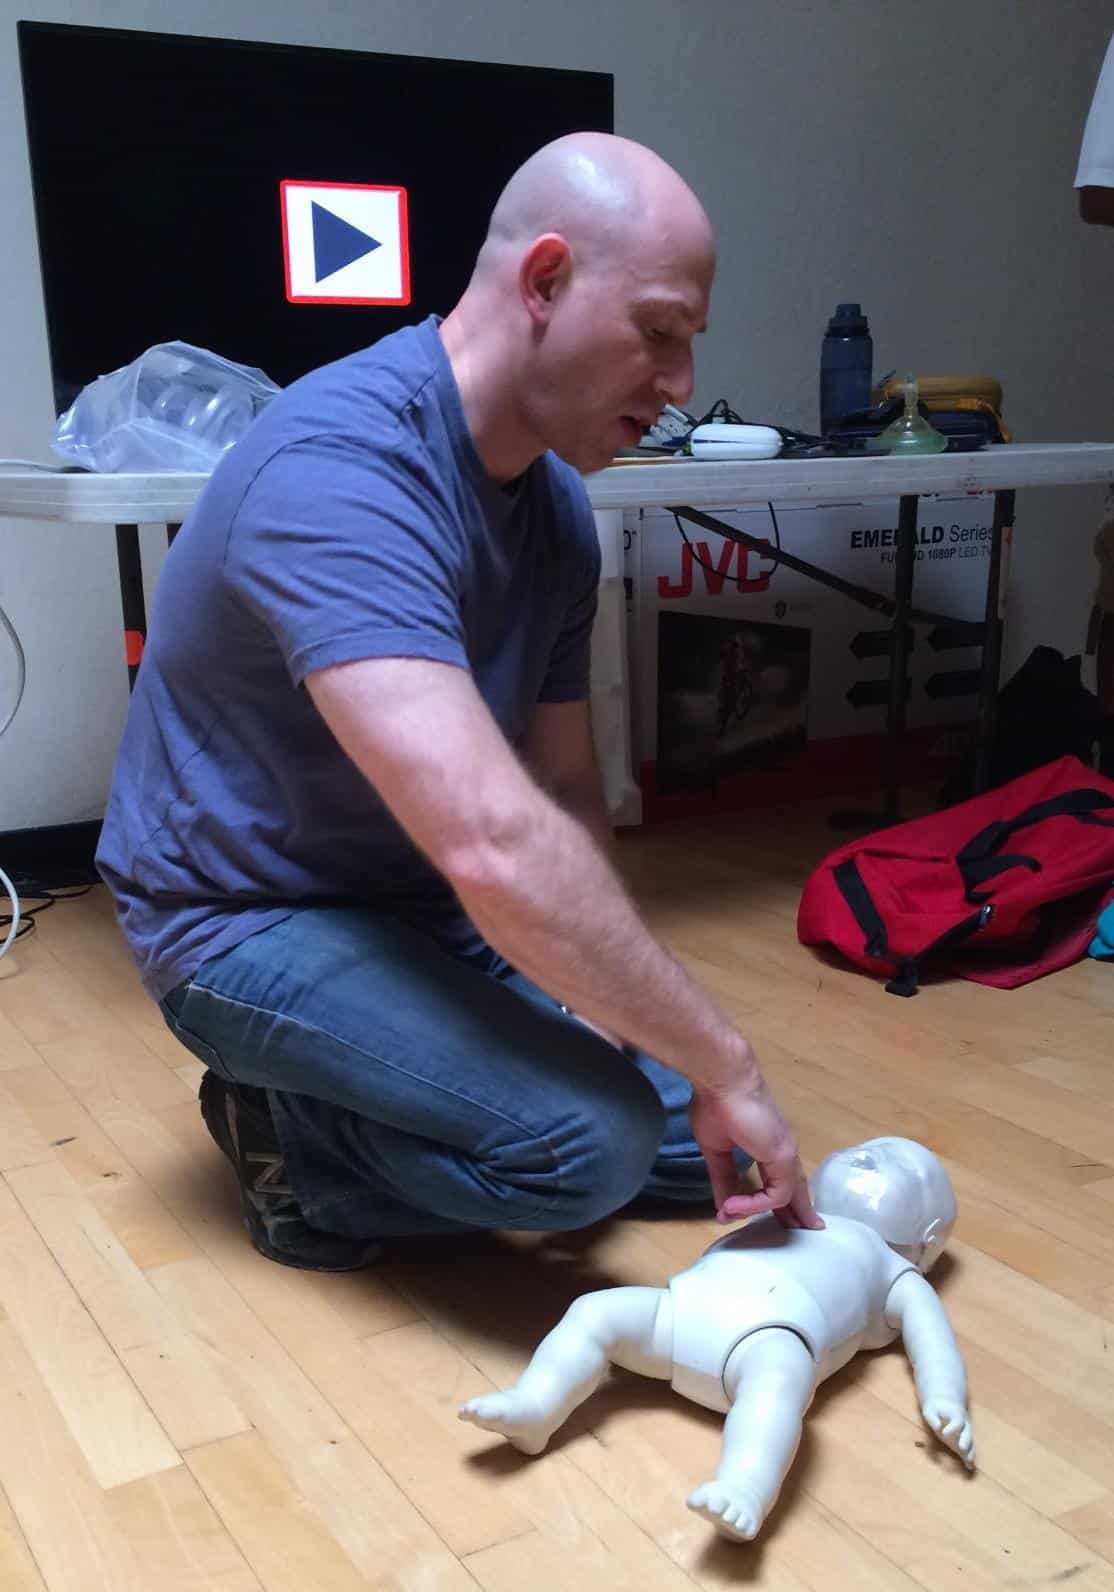 Josh Sauberman instructing CPR with an infant manikin.